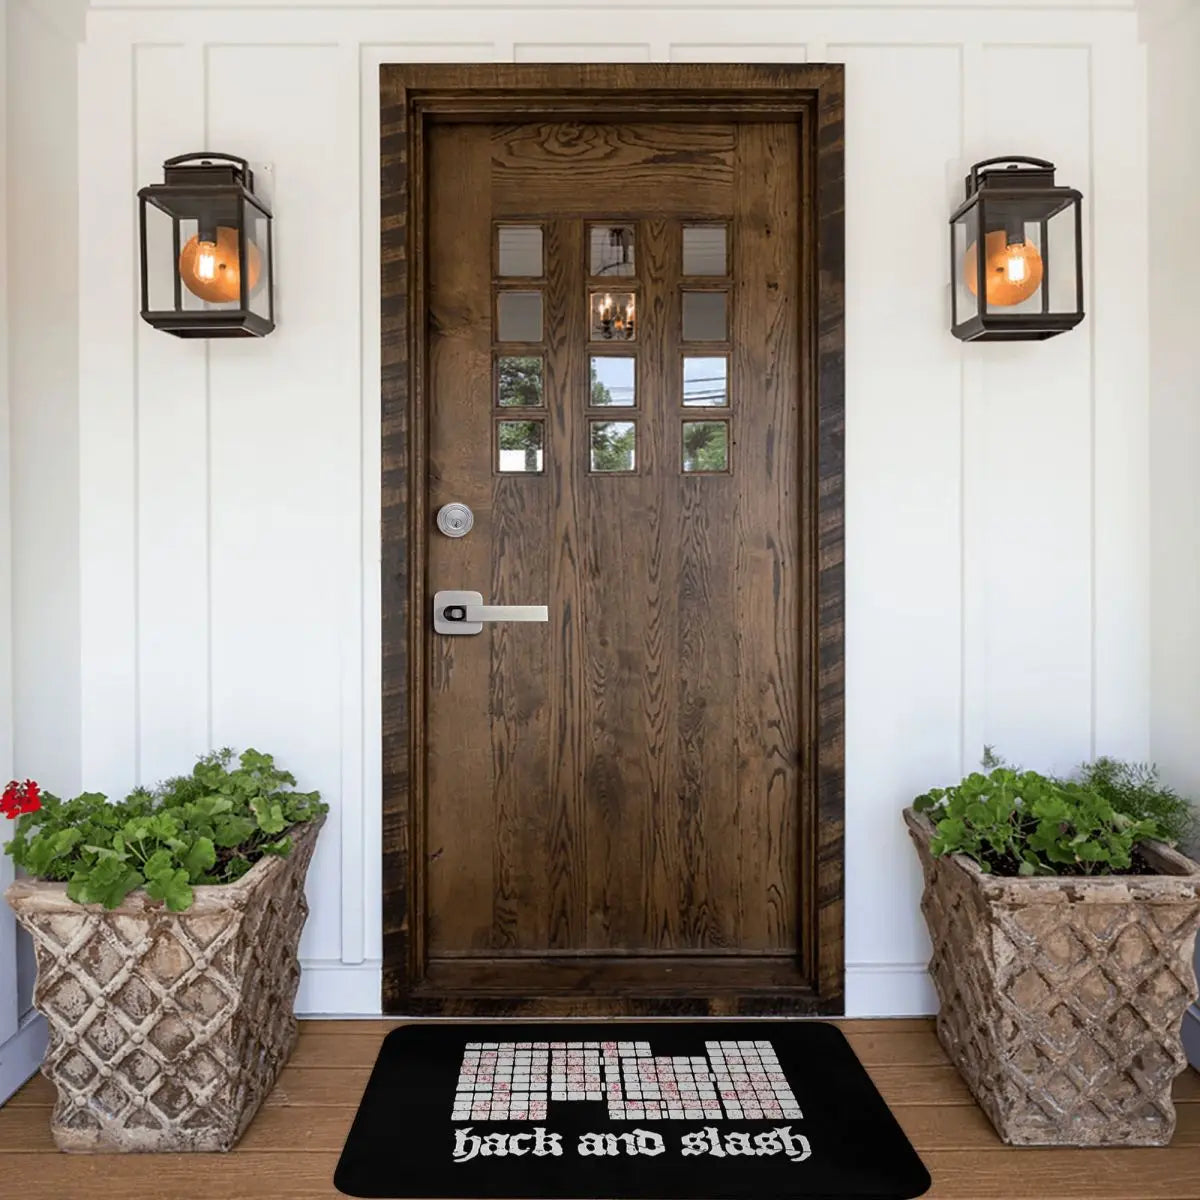 DnD Game Kitchen Non-Slip Carpet Hack And Slash Flannel Mat Entrance Door Doormat Home Decor Rug